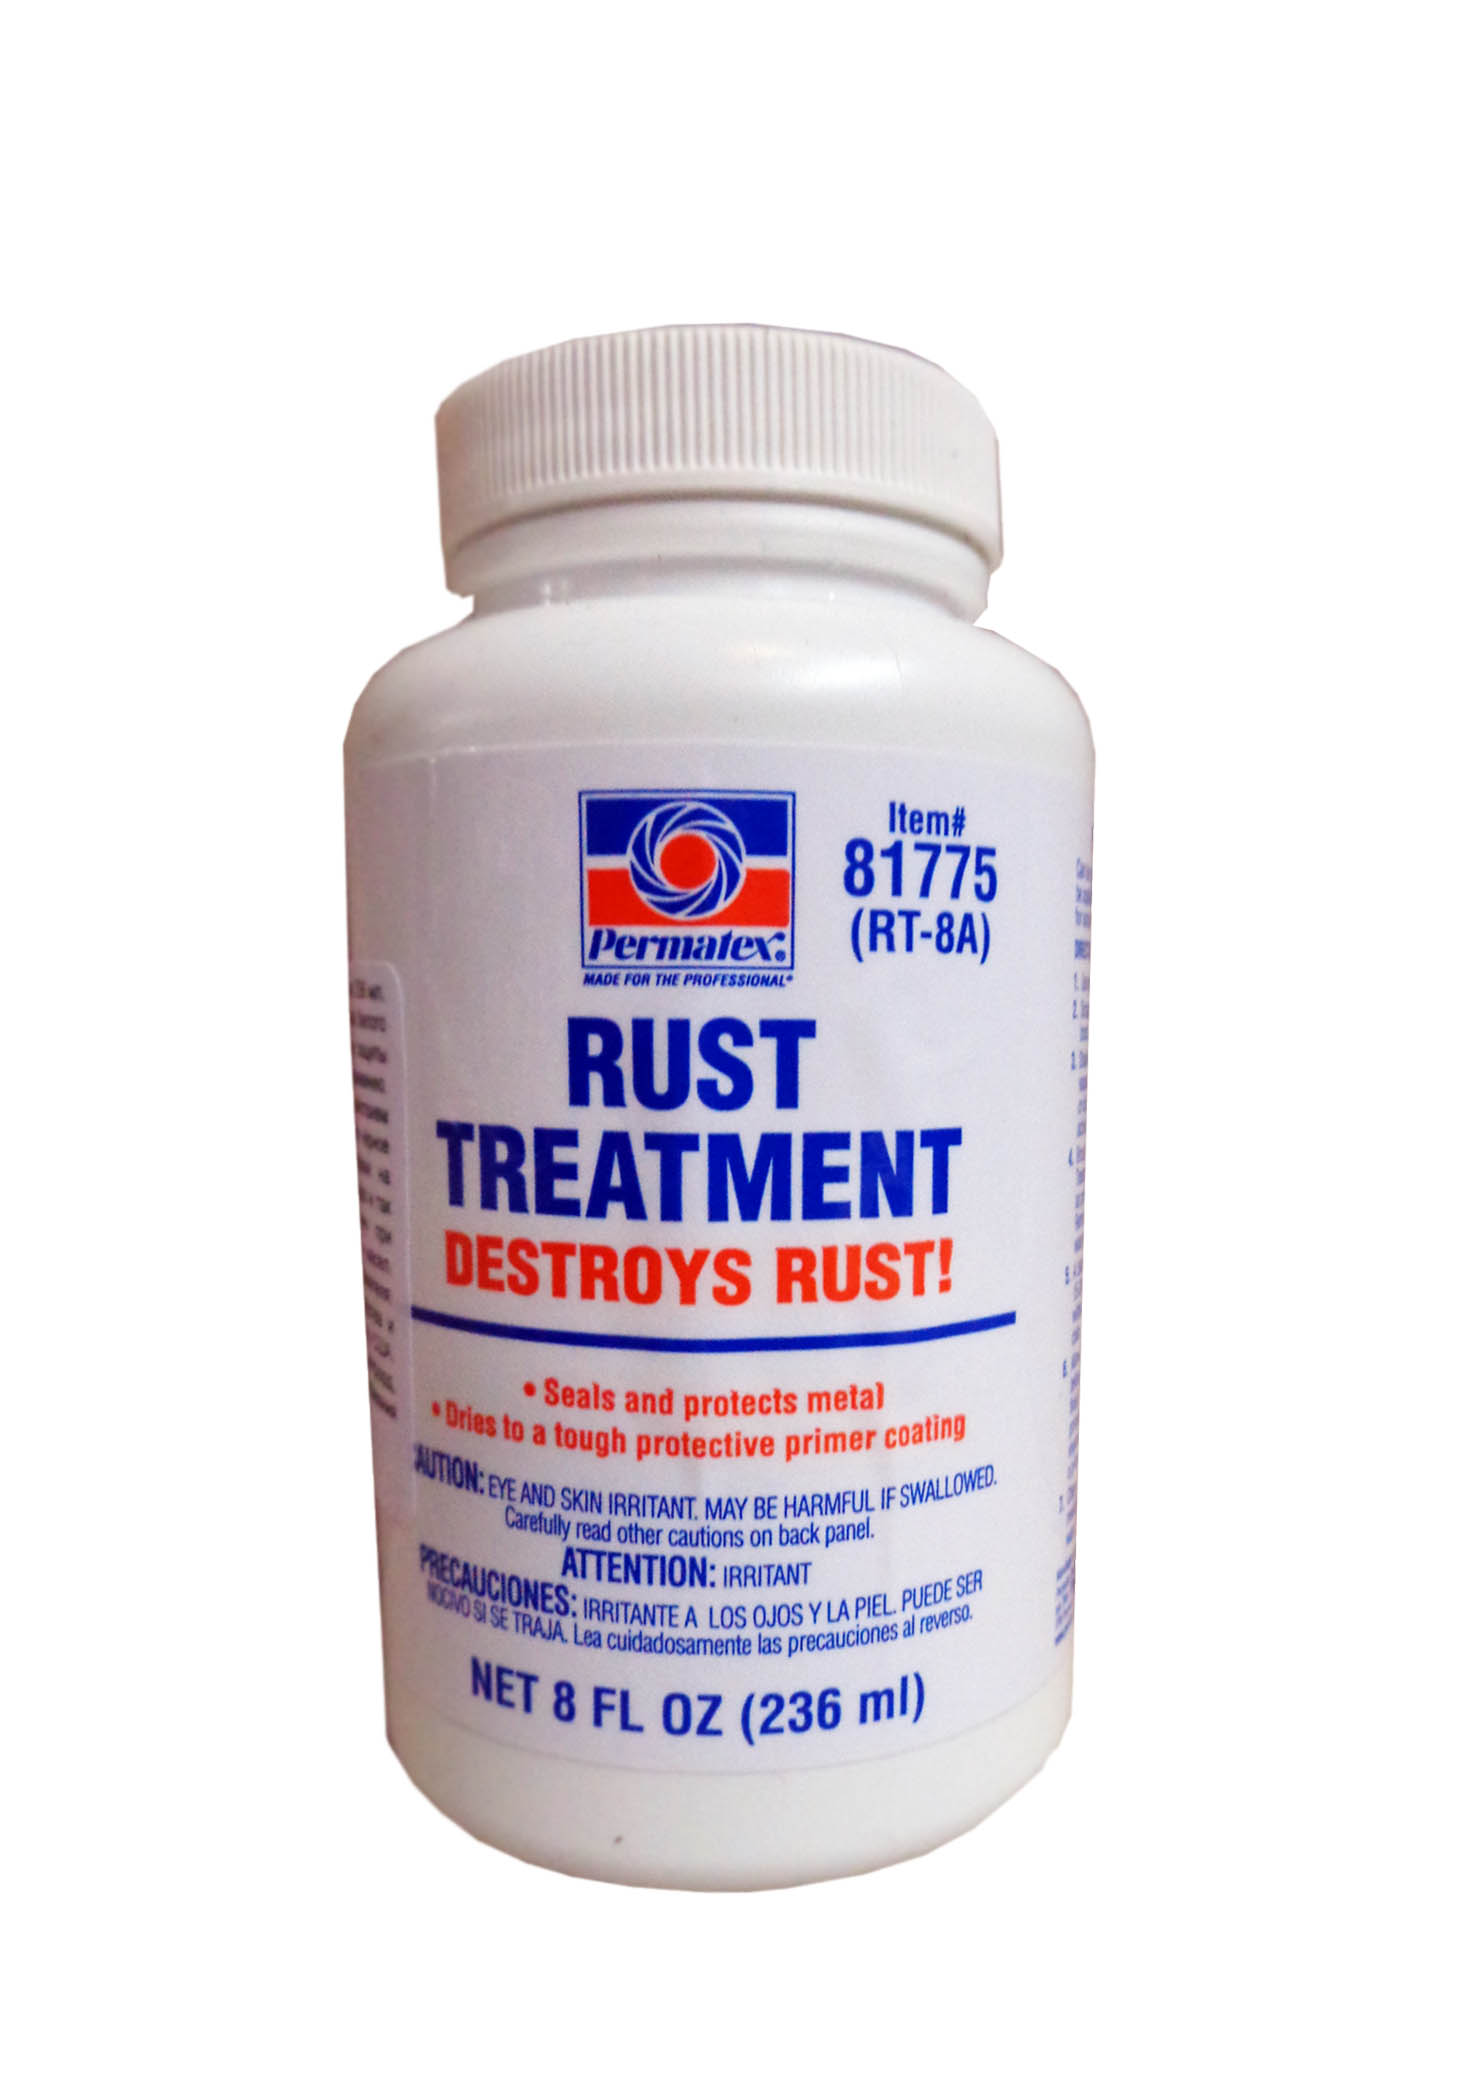 Permatex rust treatment 81775